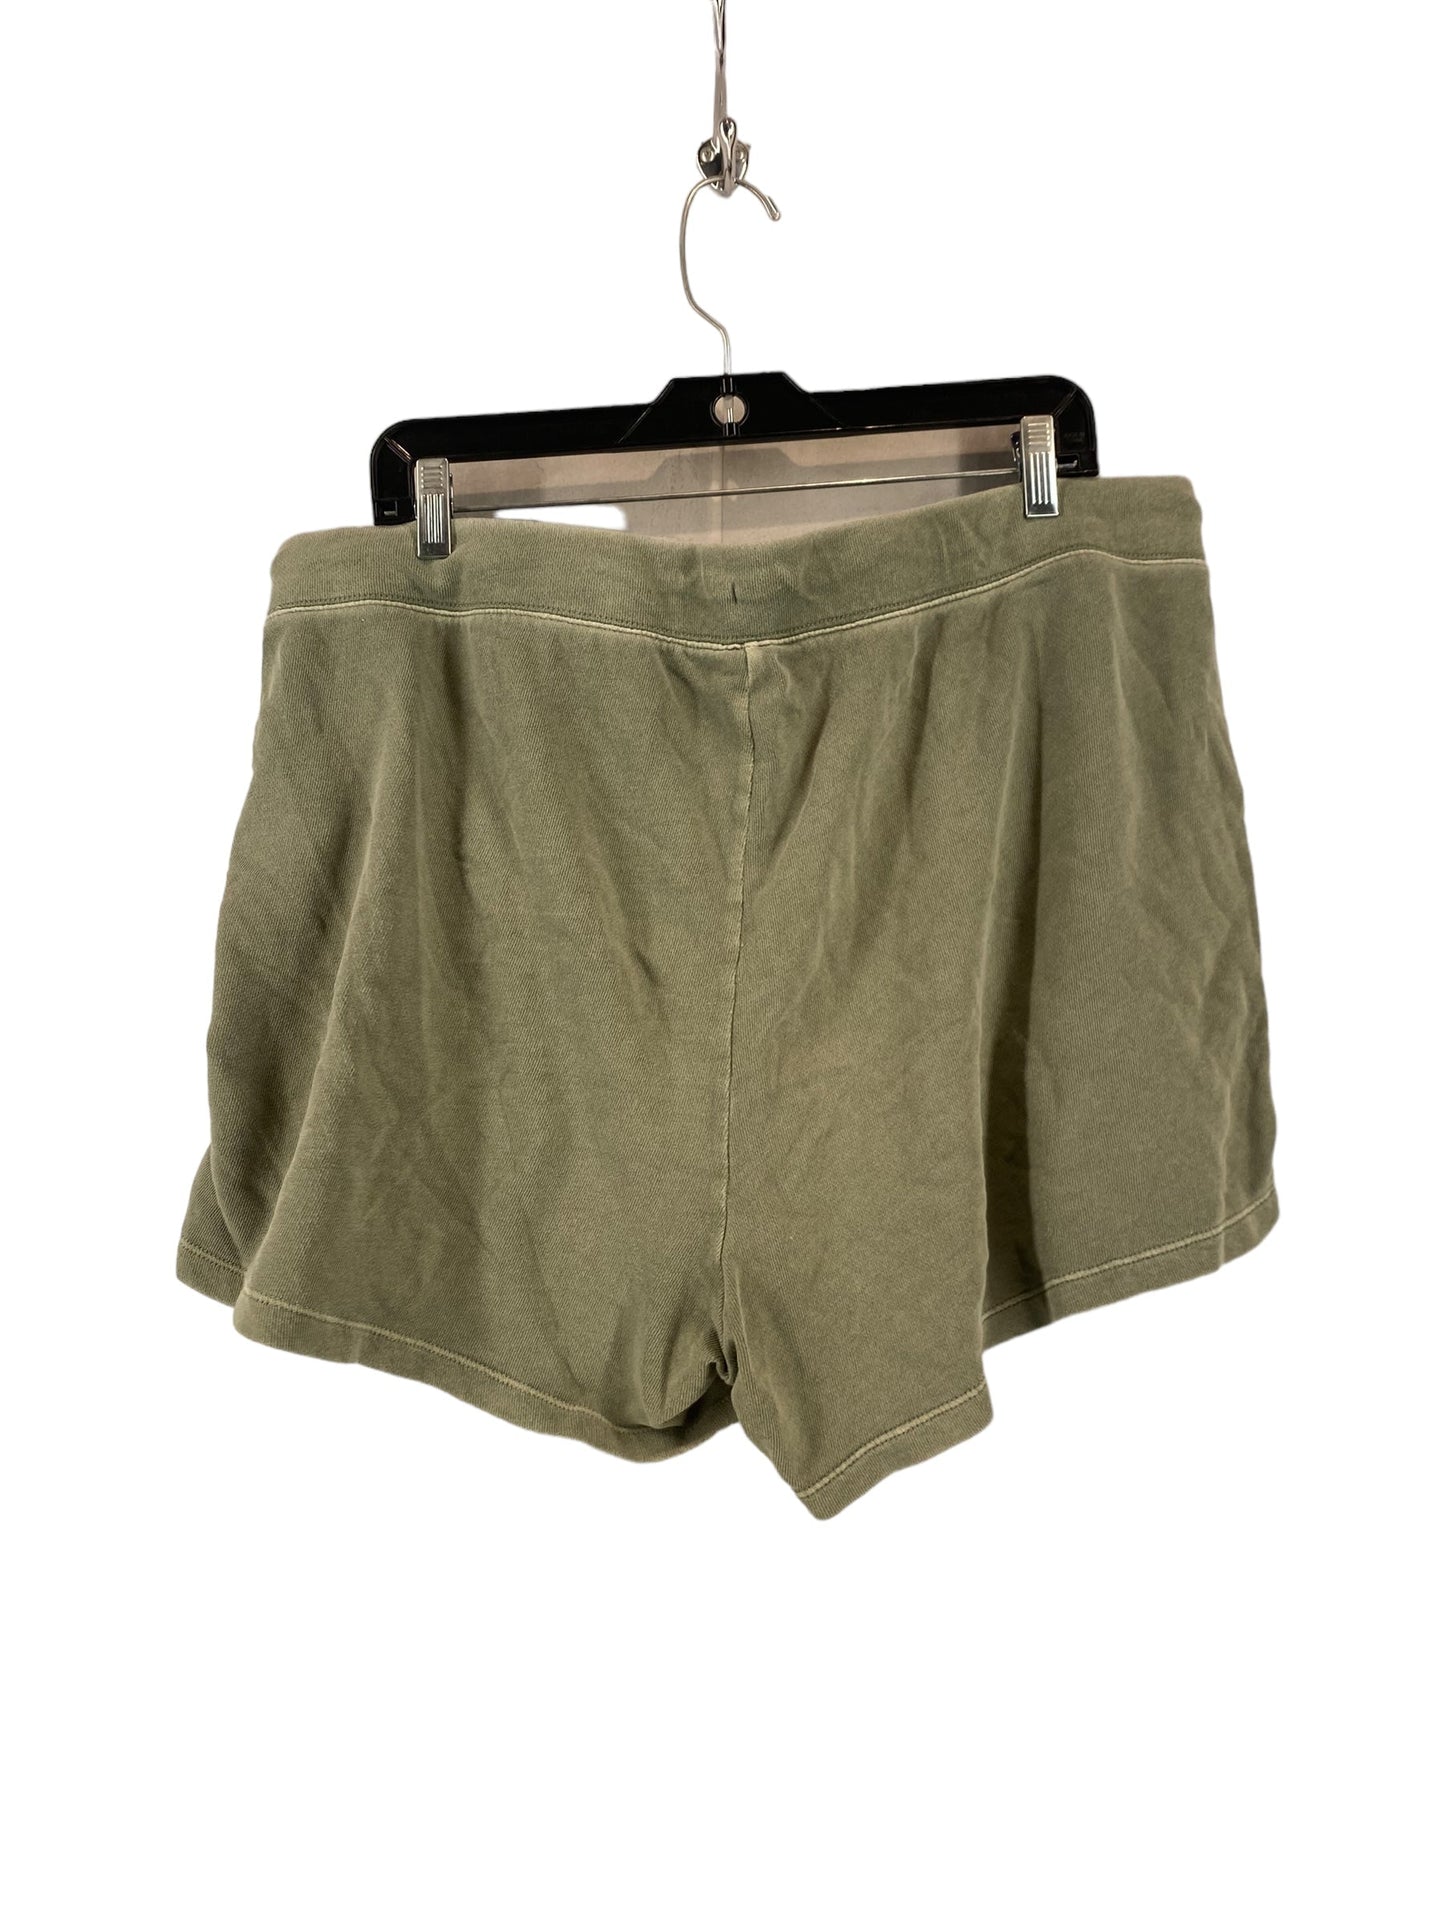 Green Shorts Old Navy, Size Xl